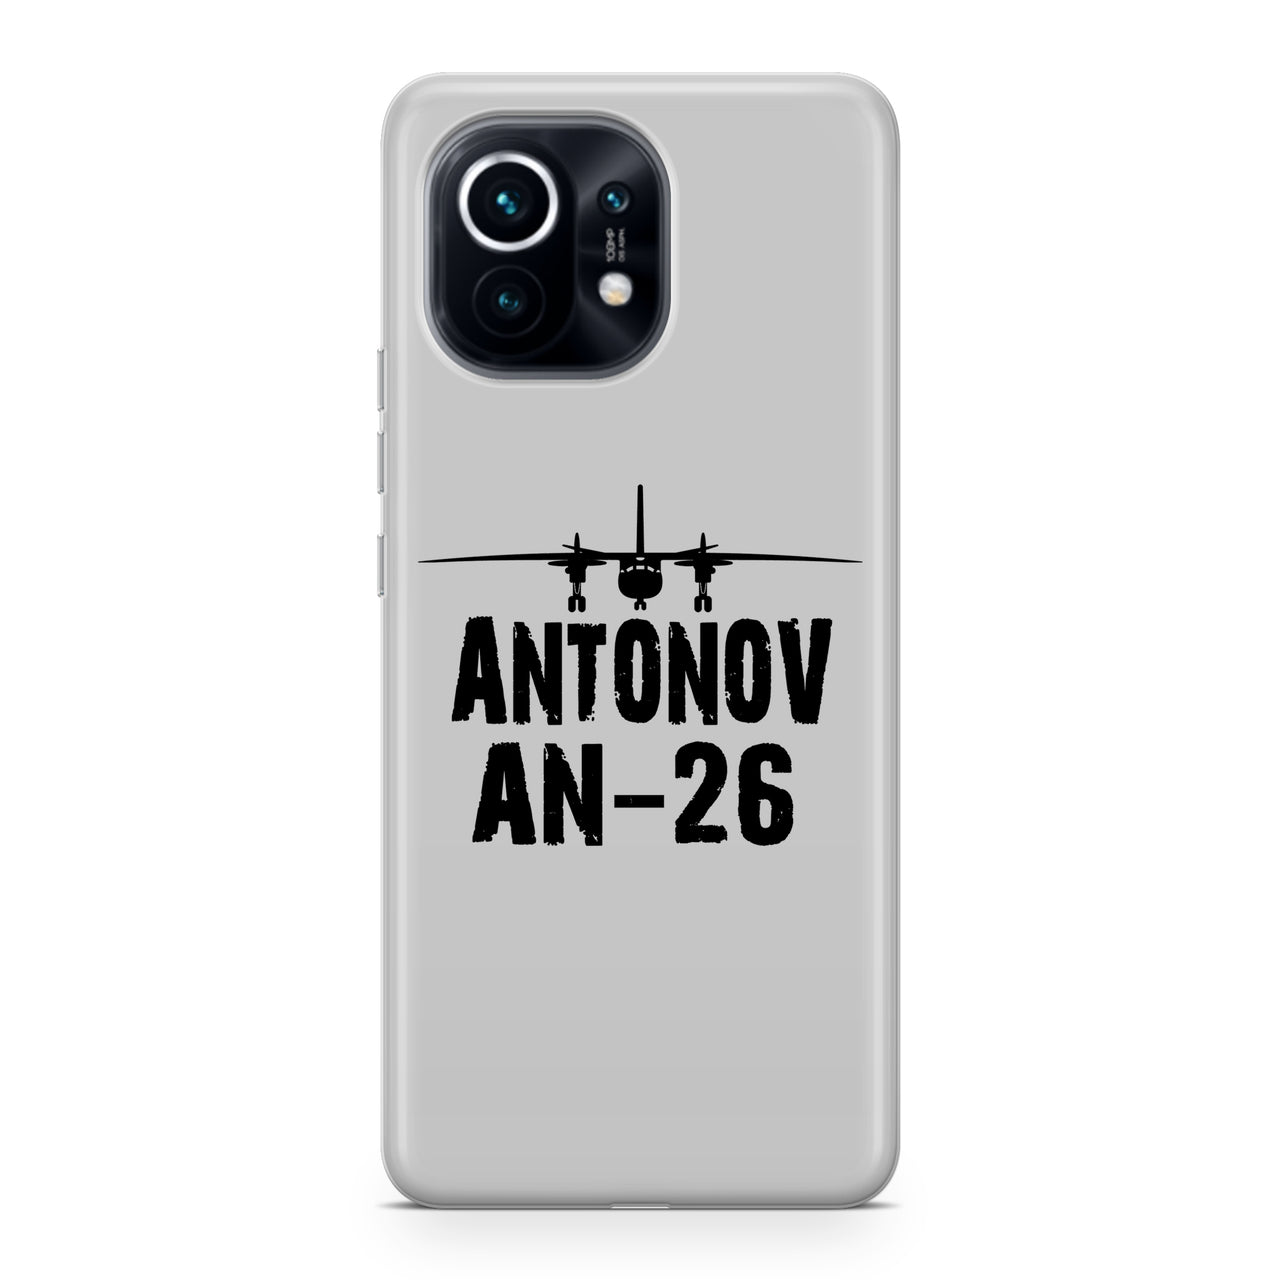 Antonov AN-26 & Plane Designed Xiaomi Cases